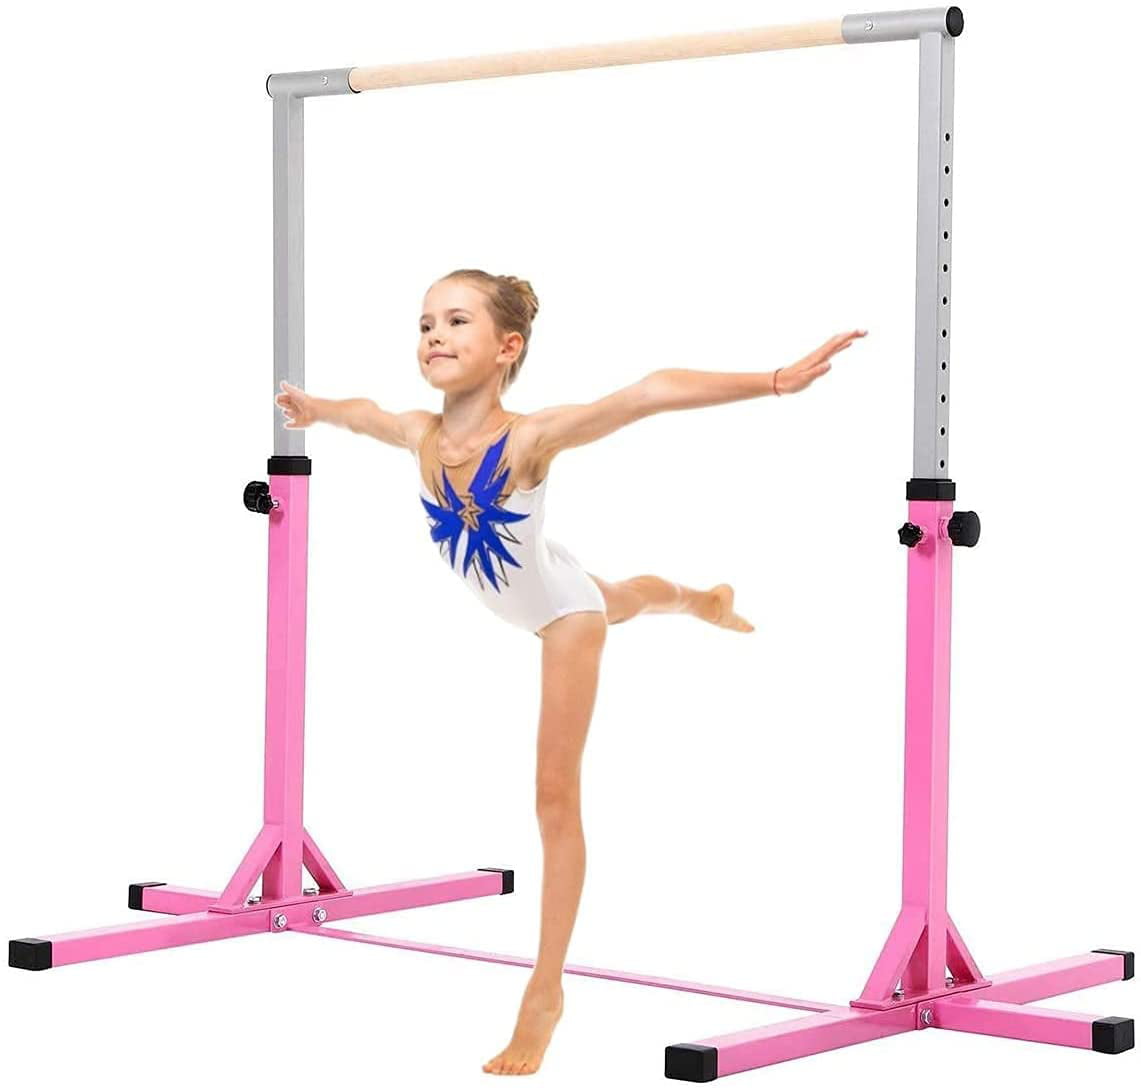 Blue Height Adjustable Junior Gymnastics Training Horizontal Kip Bar W/ Gym Mat 